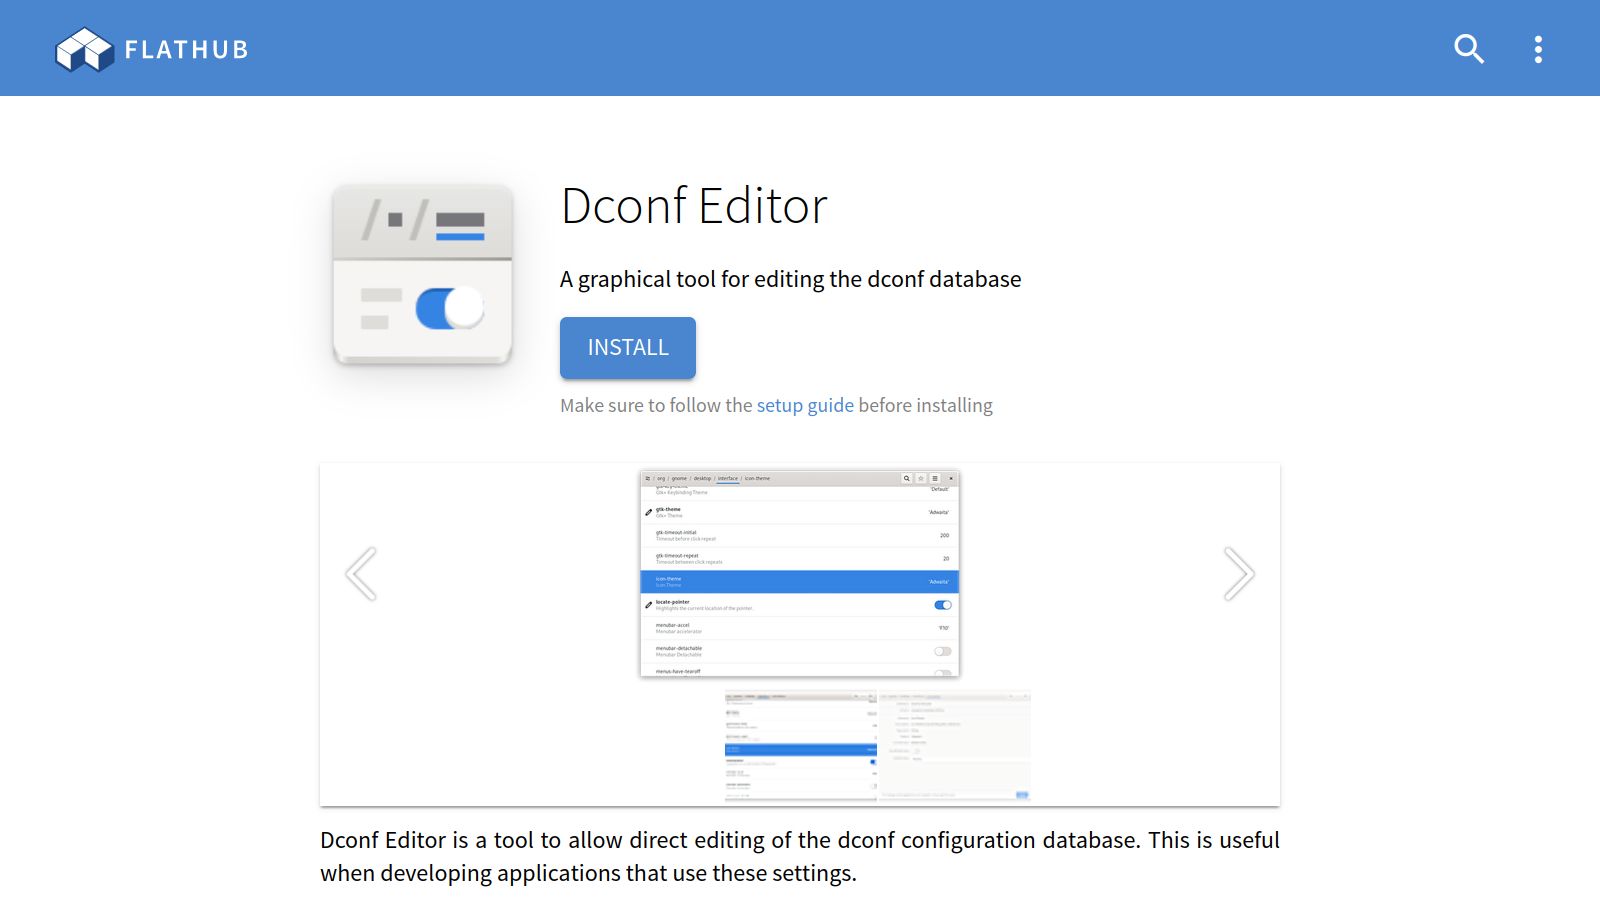 Flathub webpage of Dconf Editor